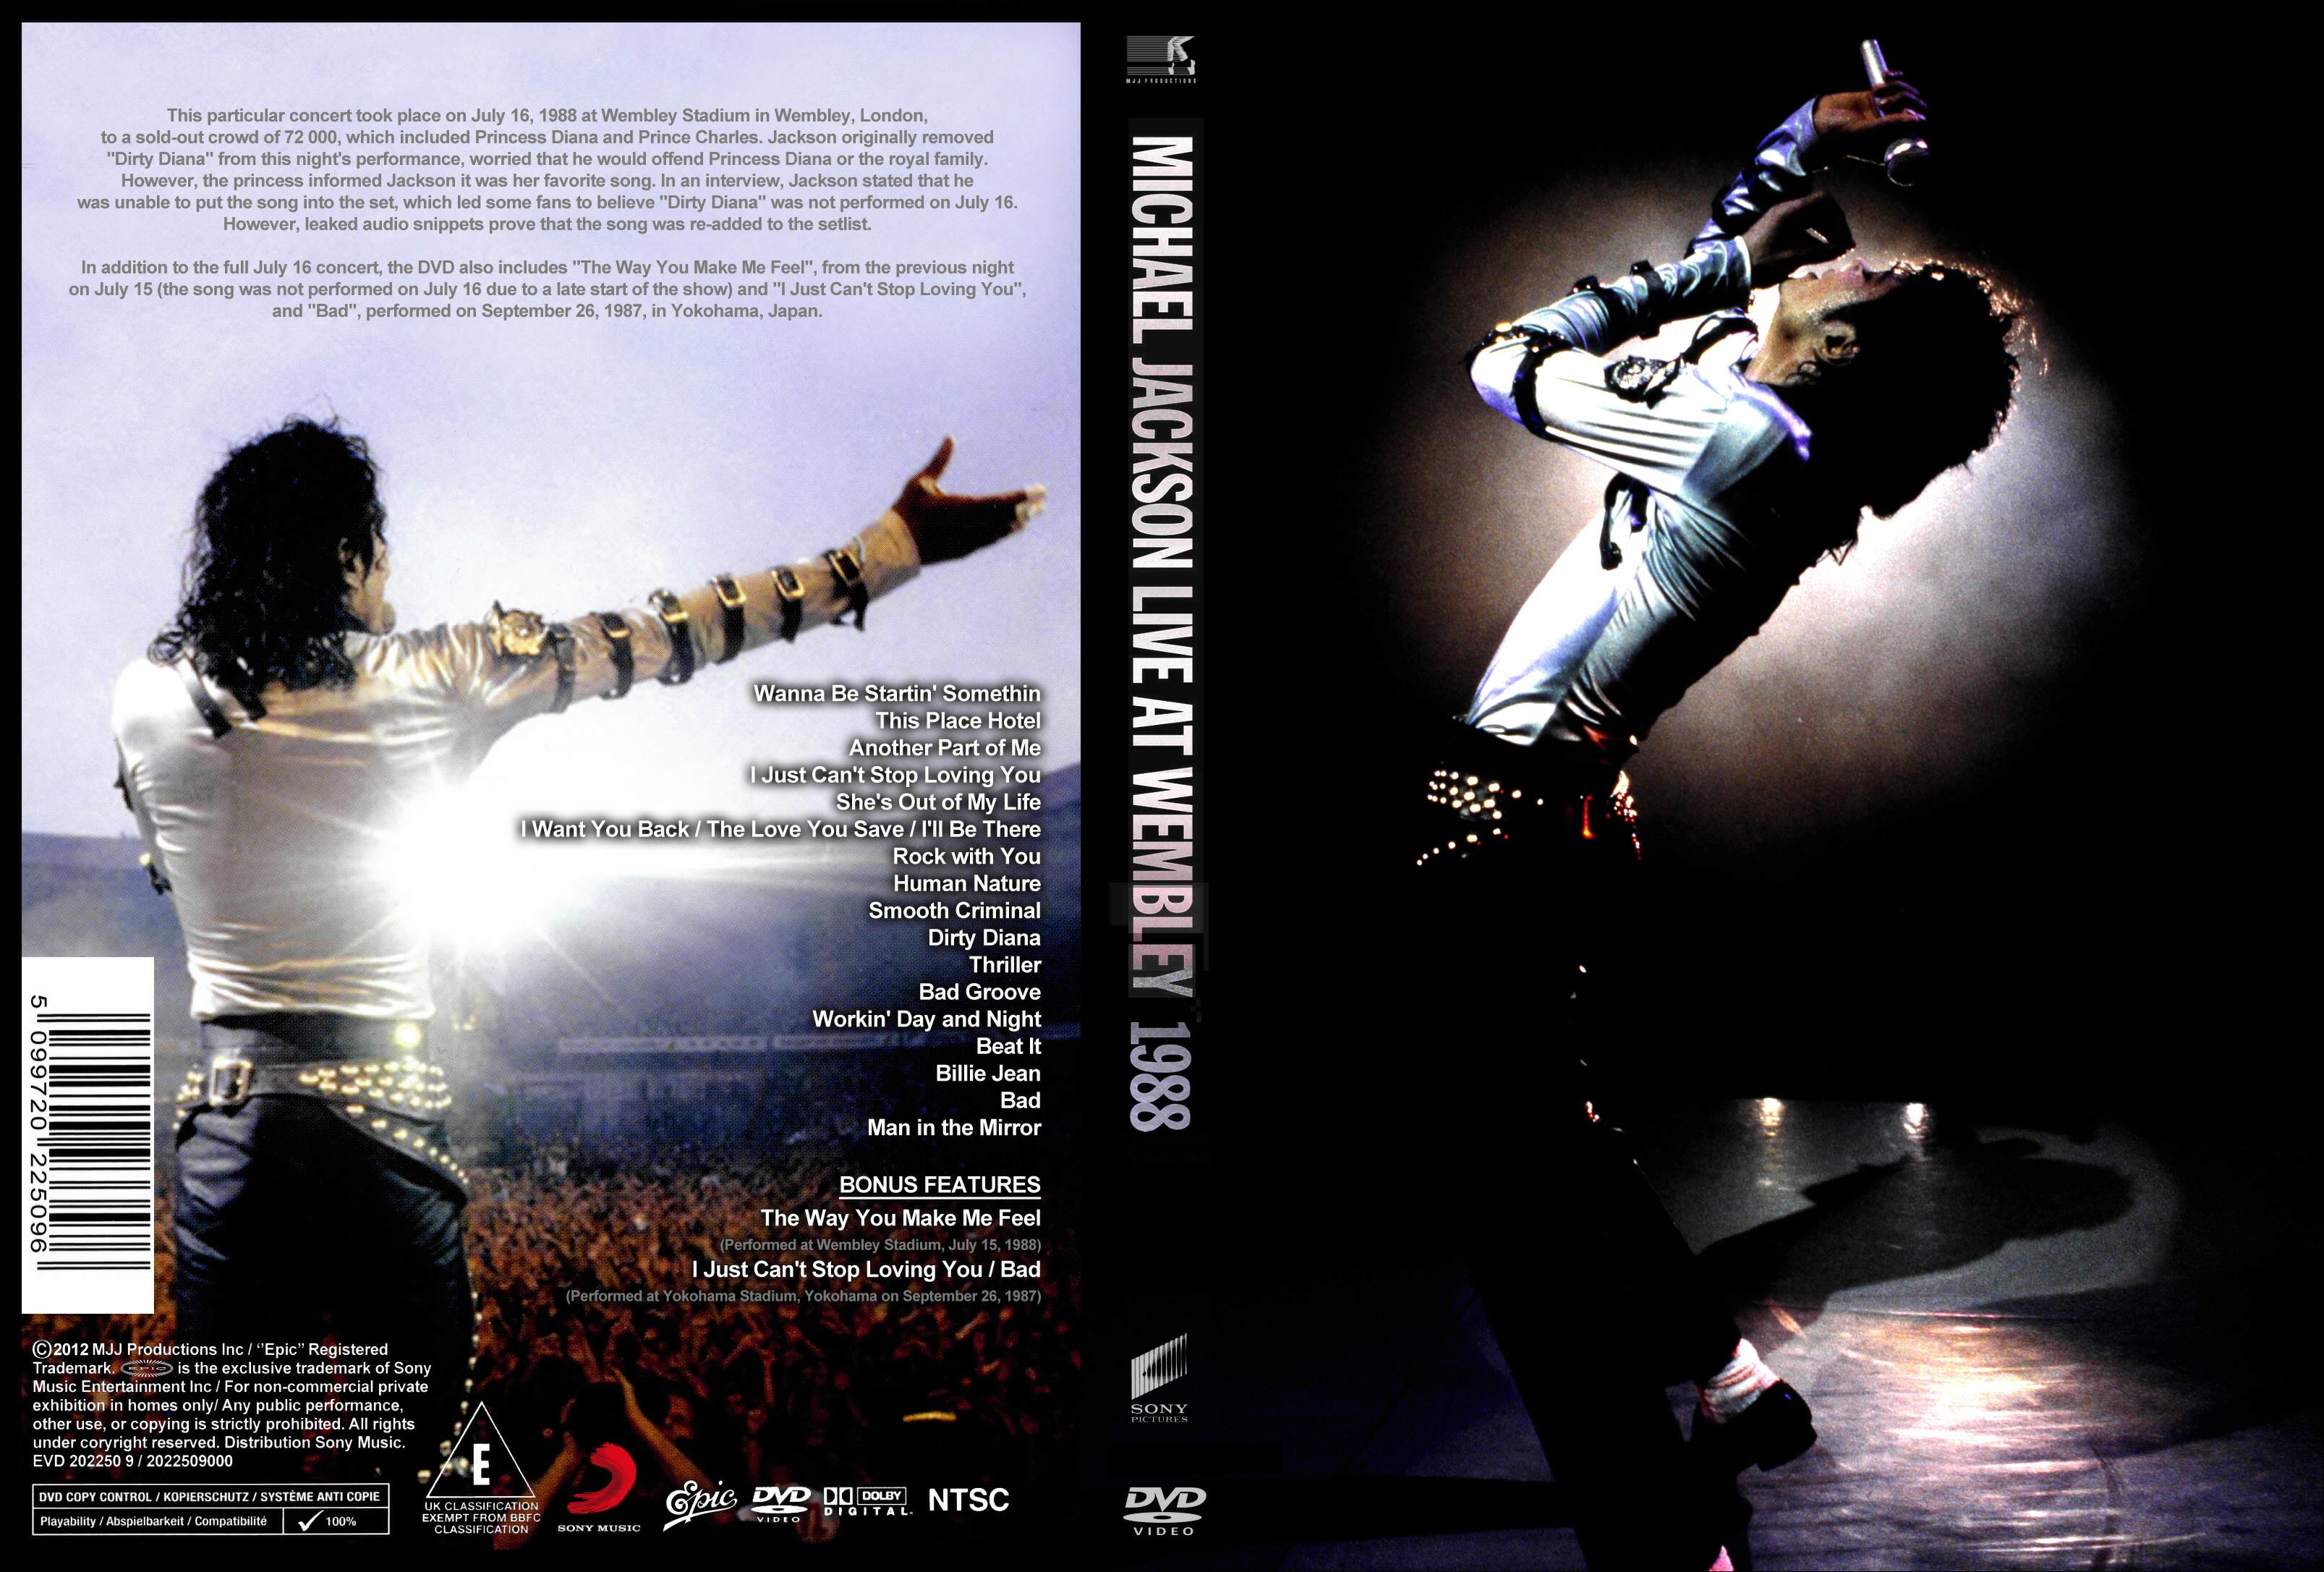 Michael jackson live. Michael Jackson Live at Wembley July 16, 1988 DVD. Michael Jackson Bad Tour 1988. Bad Tour Live at Wembley Stadium 1988.